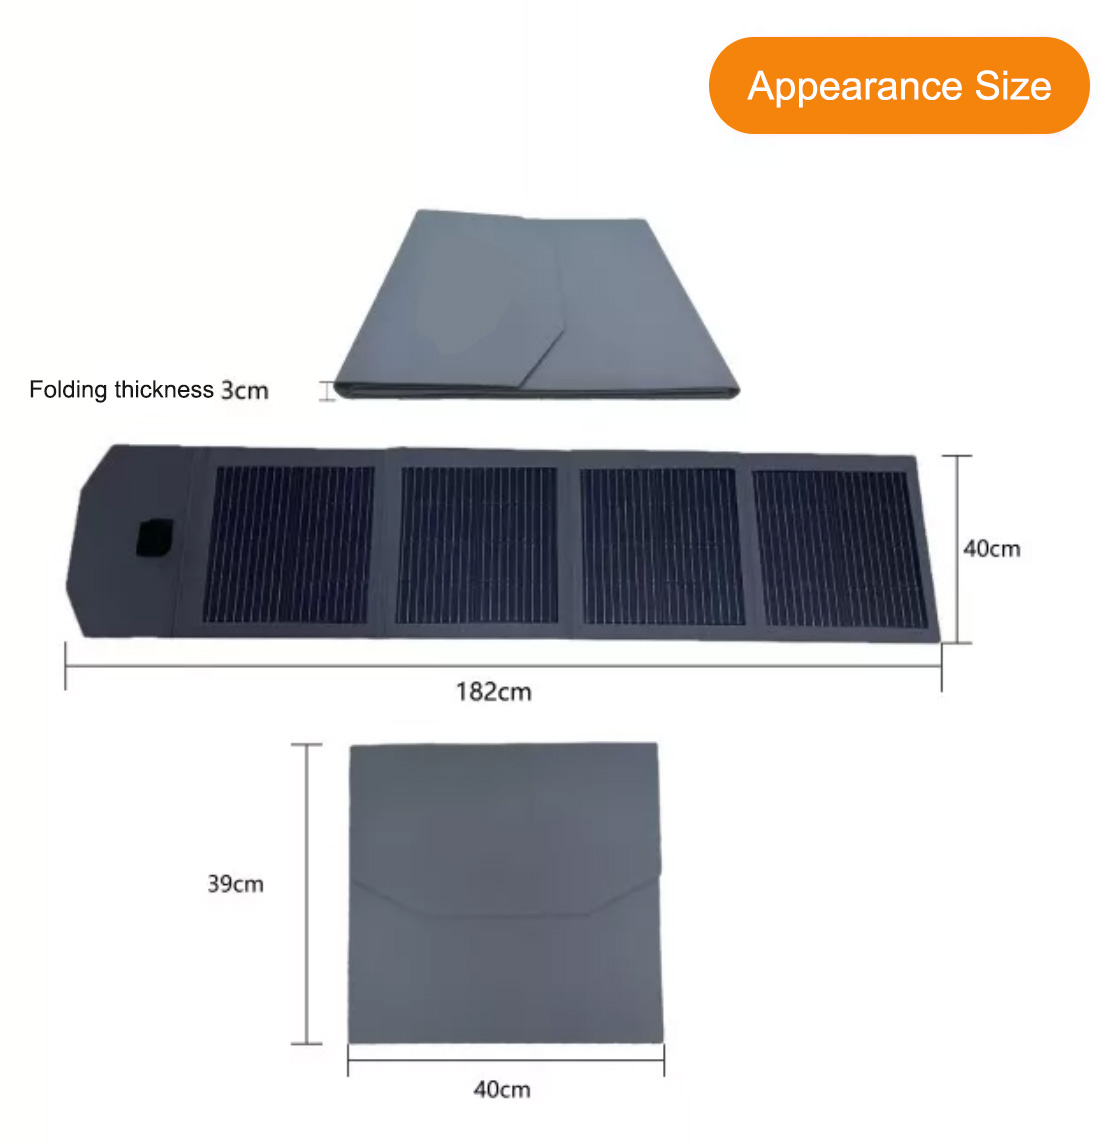 powerness solar panel